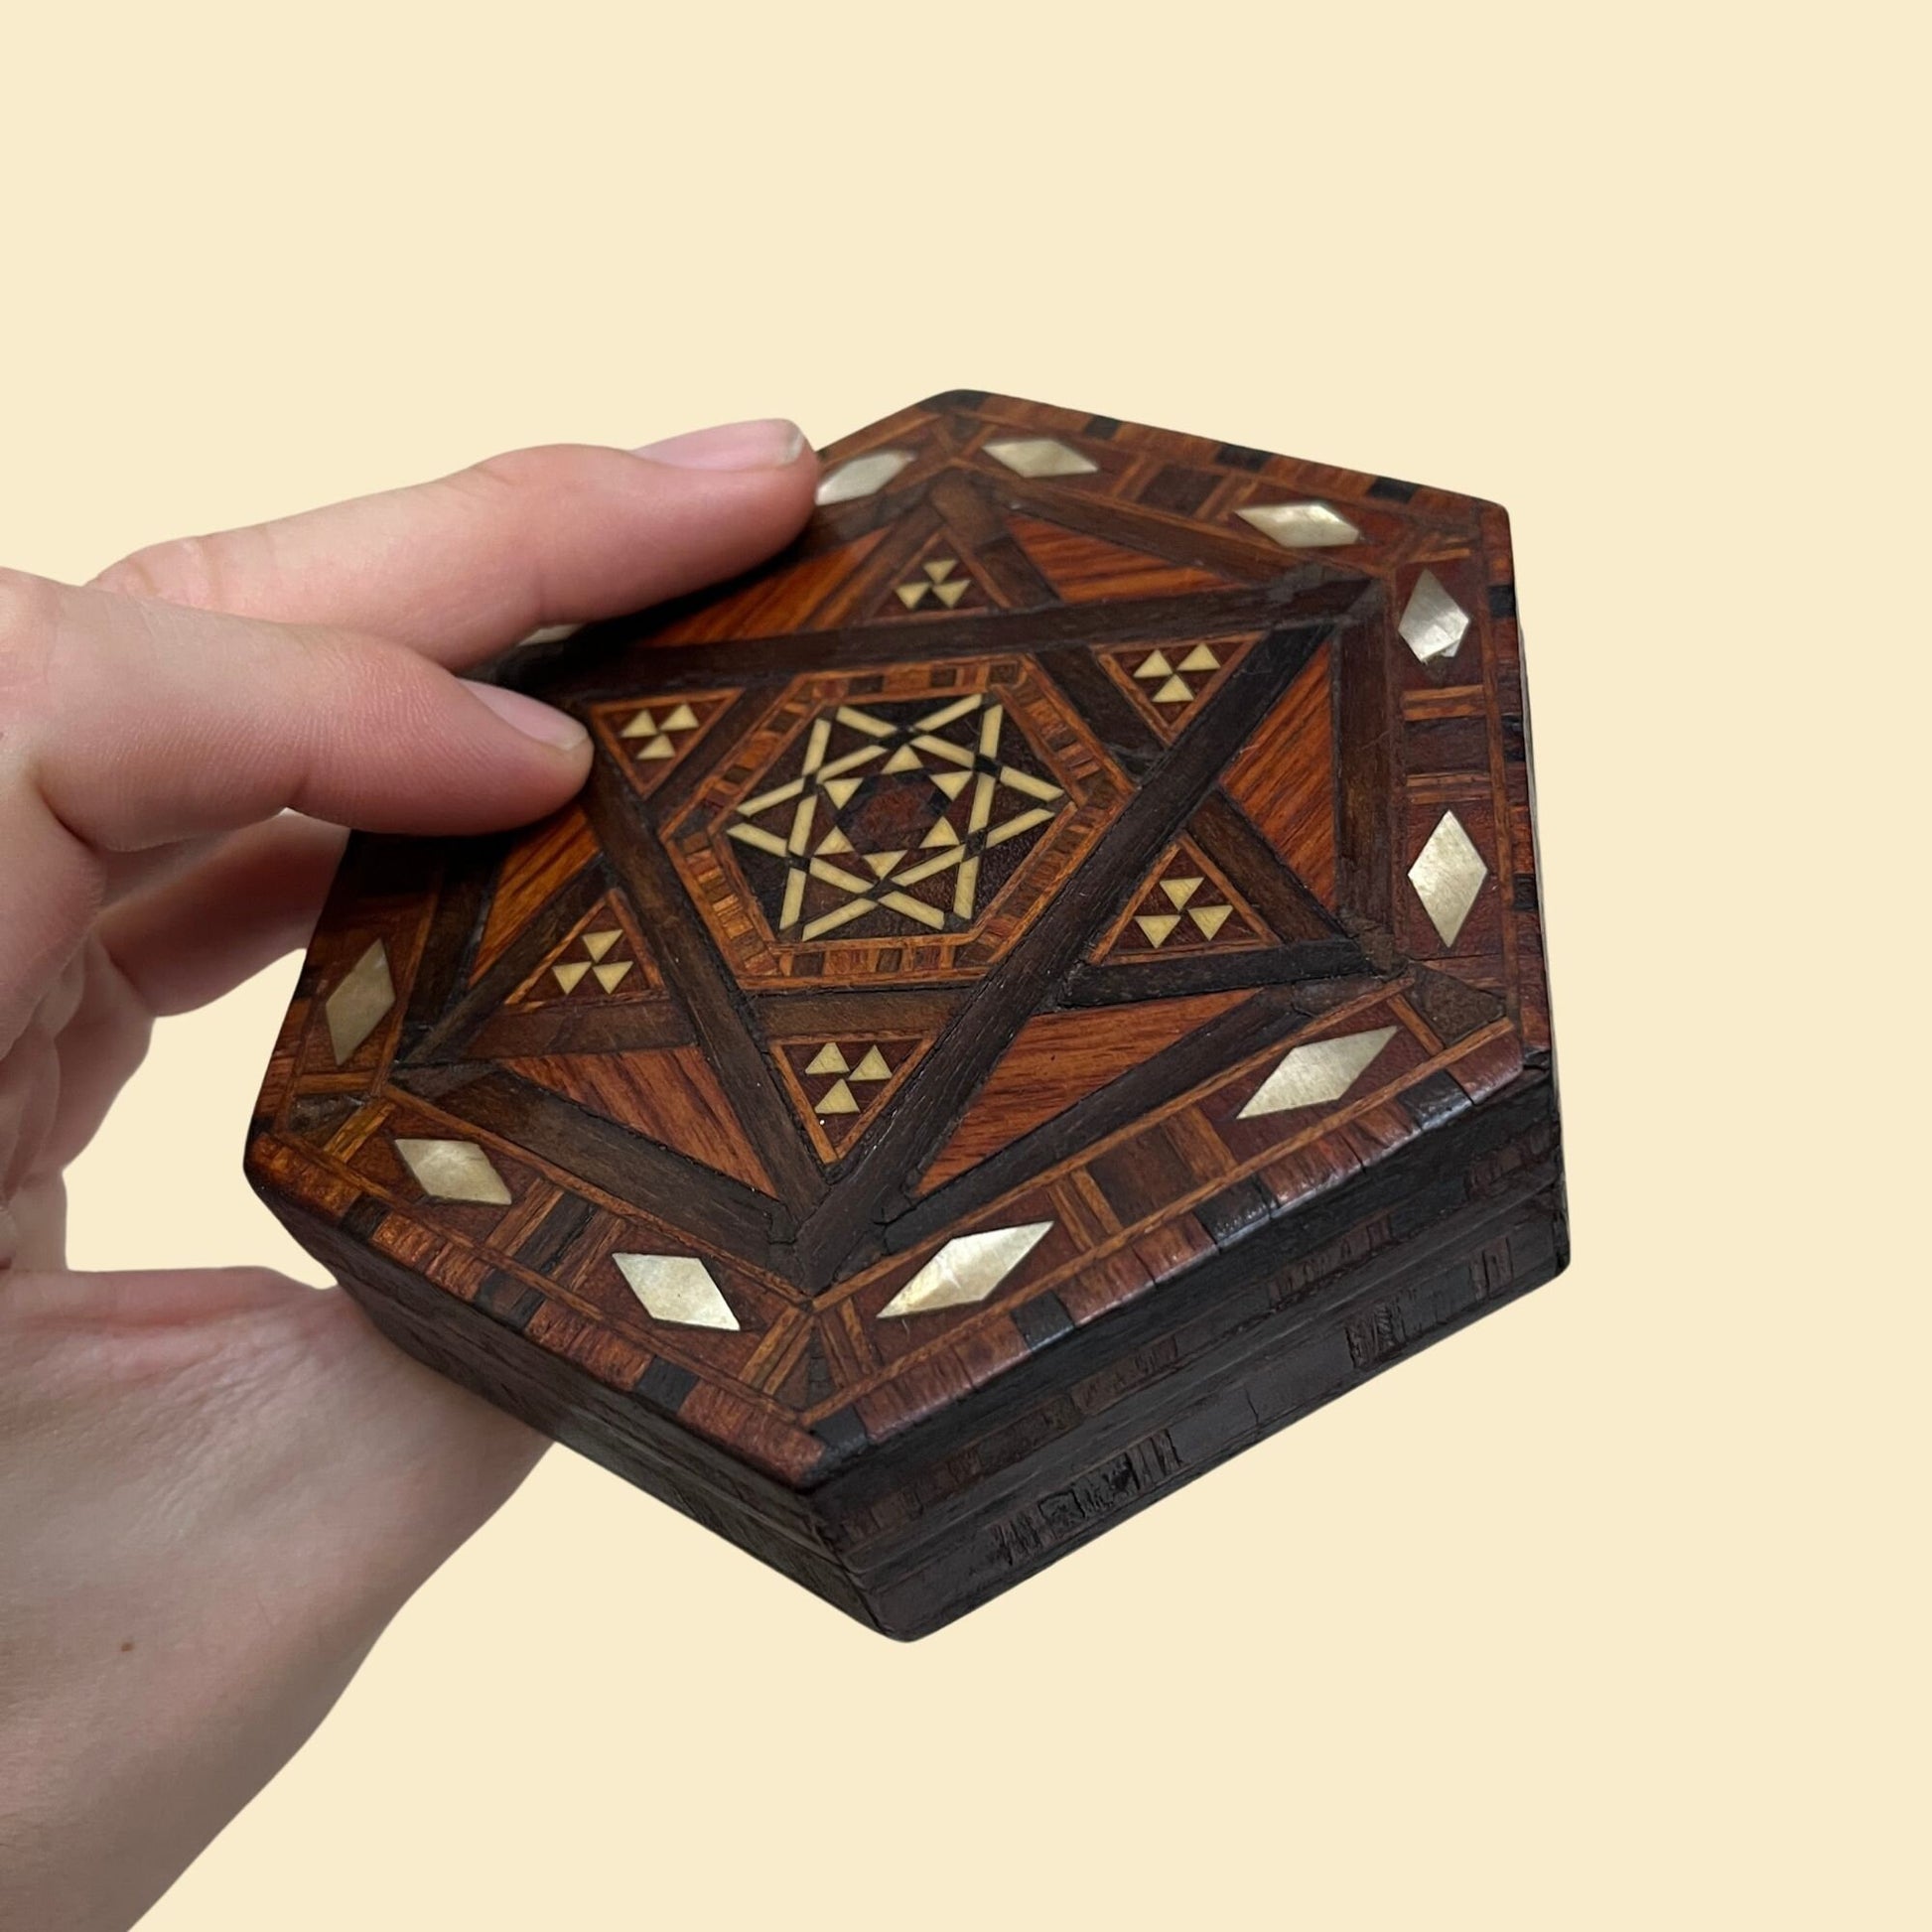 Vintage handmade wooden box with stone inlay, 1950s octagon shaped wooden trinket box, intricate geometric star/octangular box